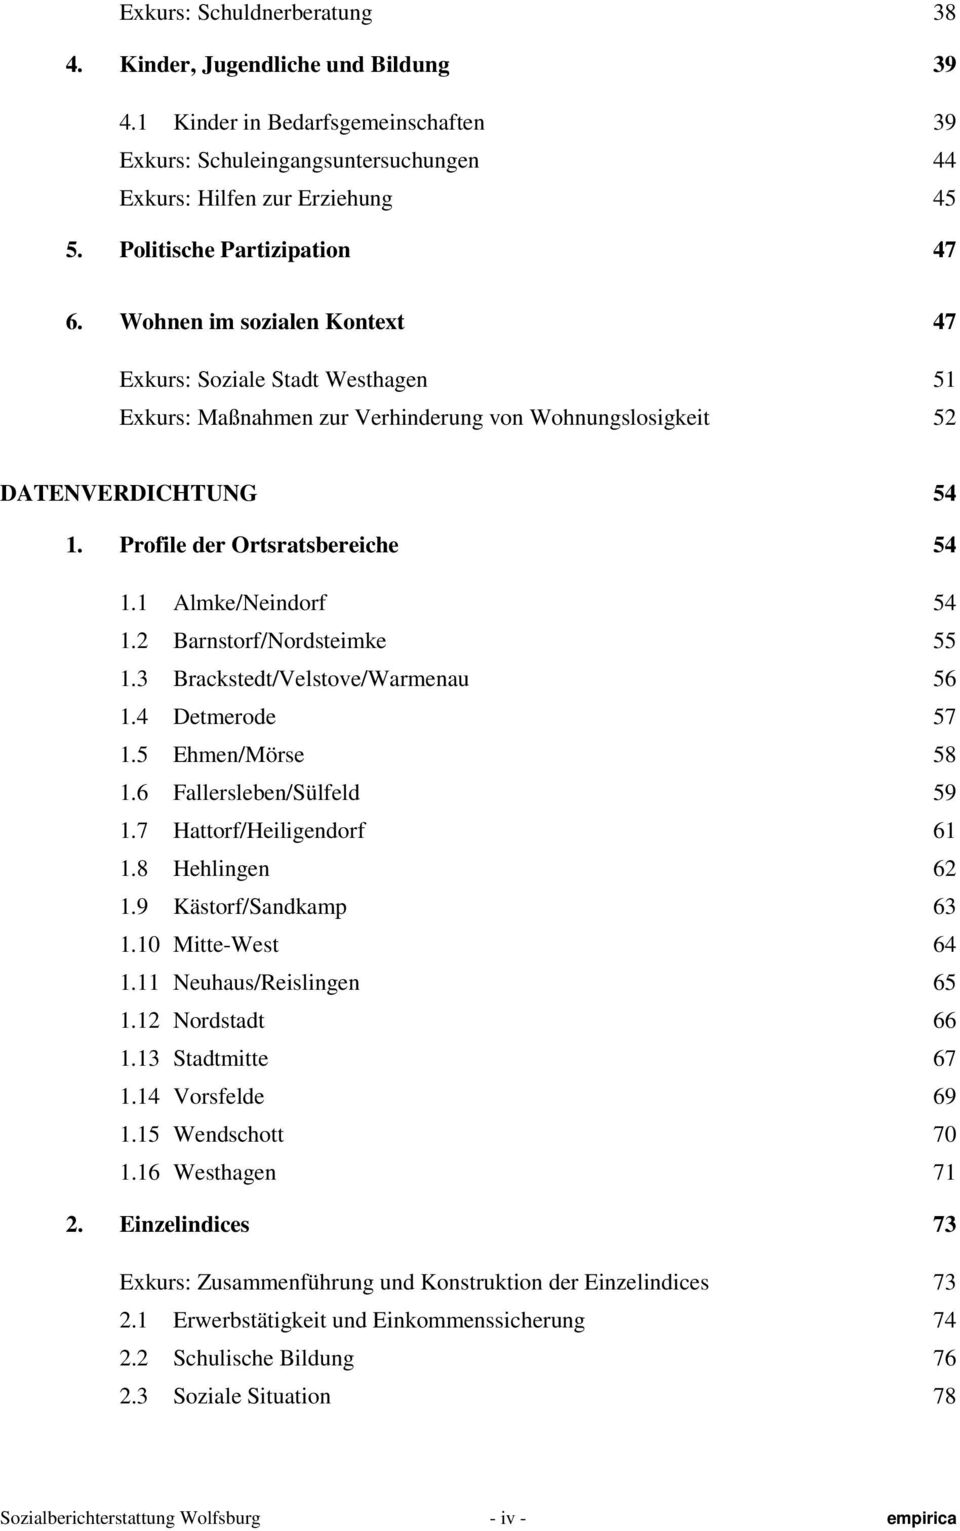 Profile der Ortsratsbereiche 54 1.1 Almke/Neindorf 54 1.2 Barnstorf/Nordsteimke 55 1.3 Brackstedt/Velstove/Warmenau 56 1.4 Detmerode 57 1.5 Ehmen/Mörse 58 1.6 Fallersleben/Sülfeld 59 1.